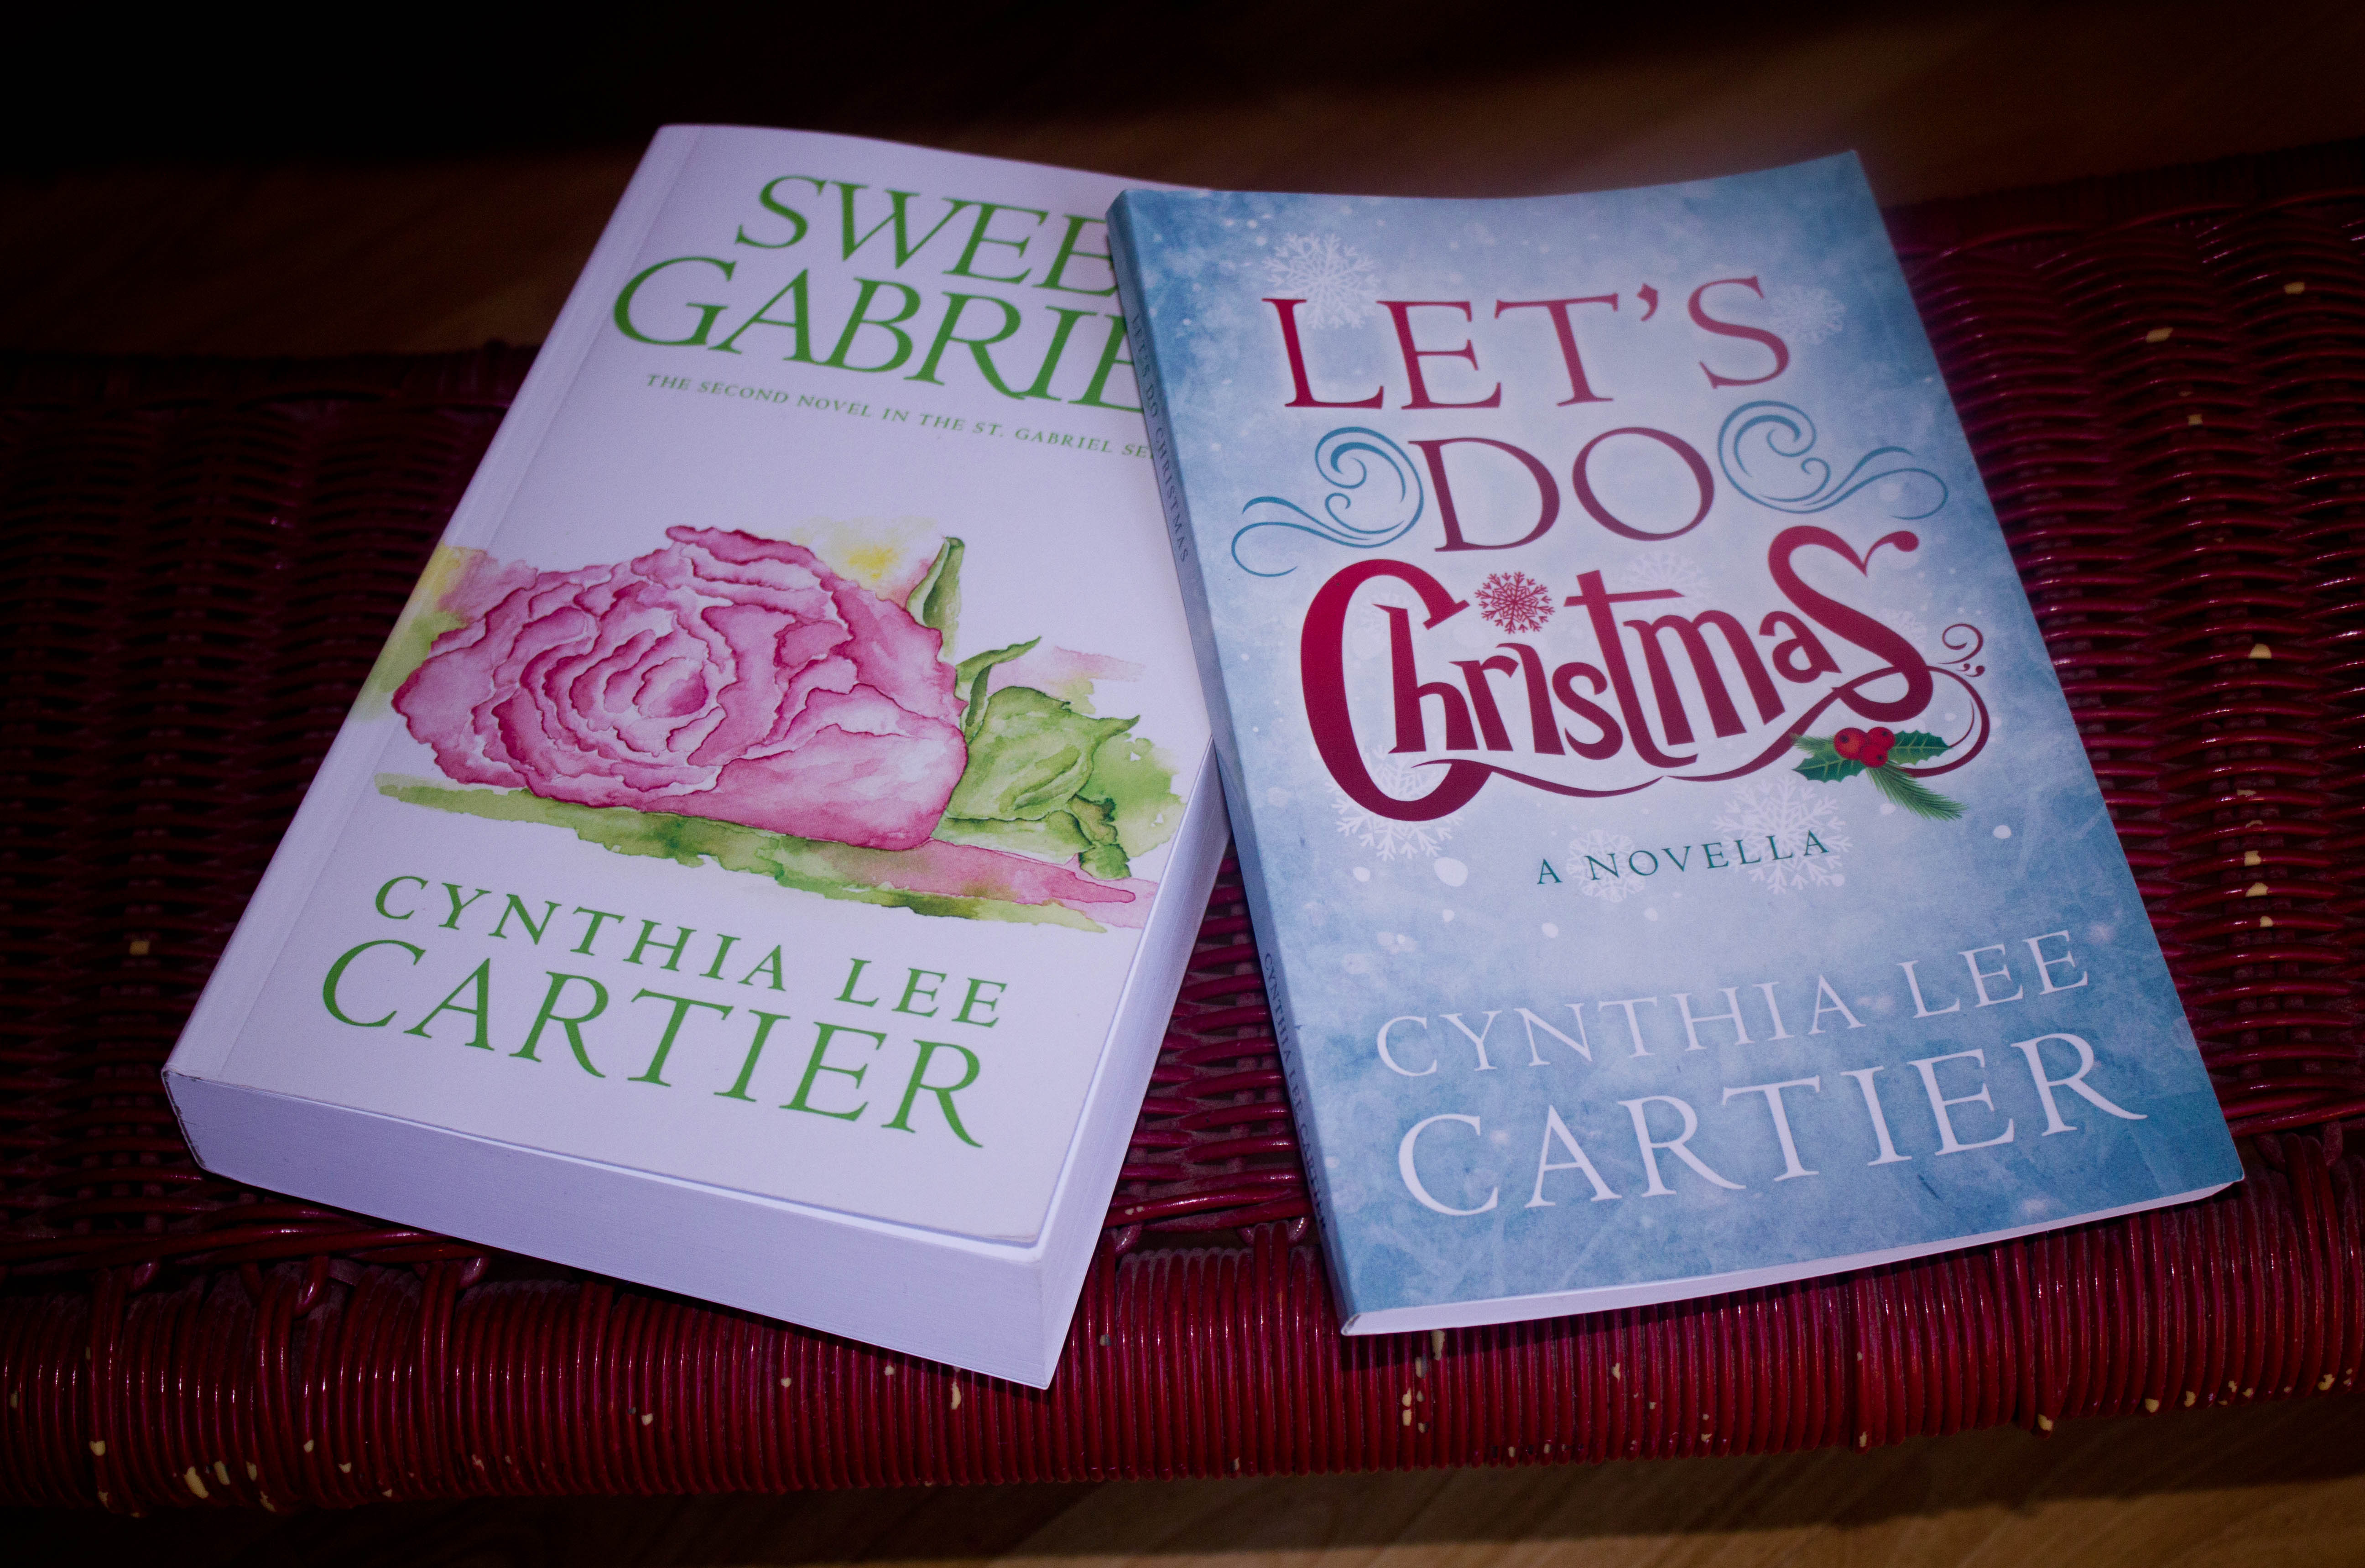 Sweet Gabriel & Let's Do Christmas paperbacks